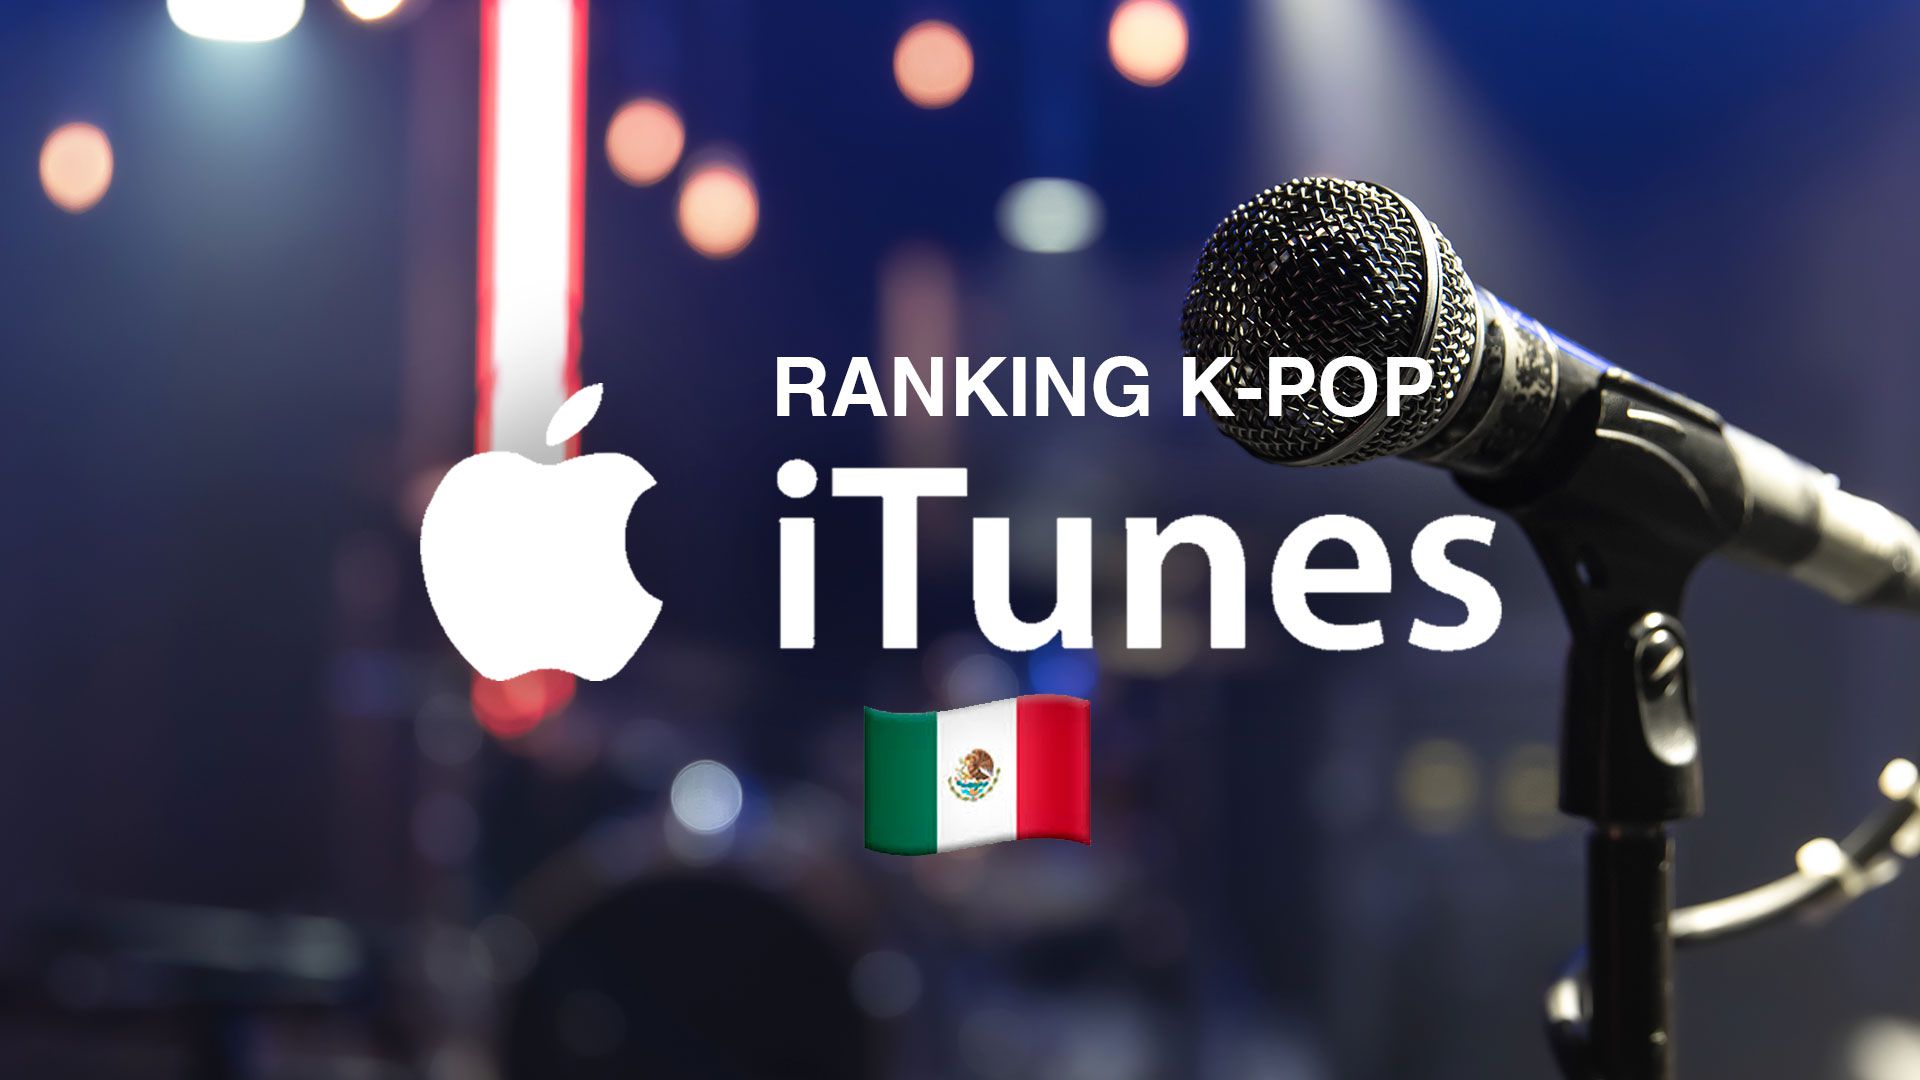 Canciones de K-pop en iTunes México para reproducir hoy